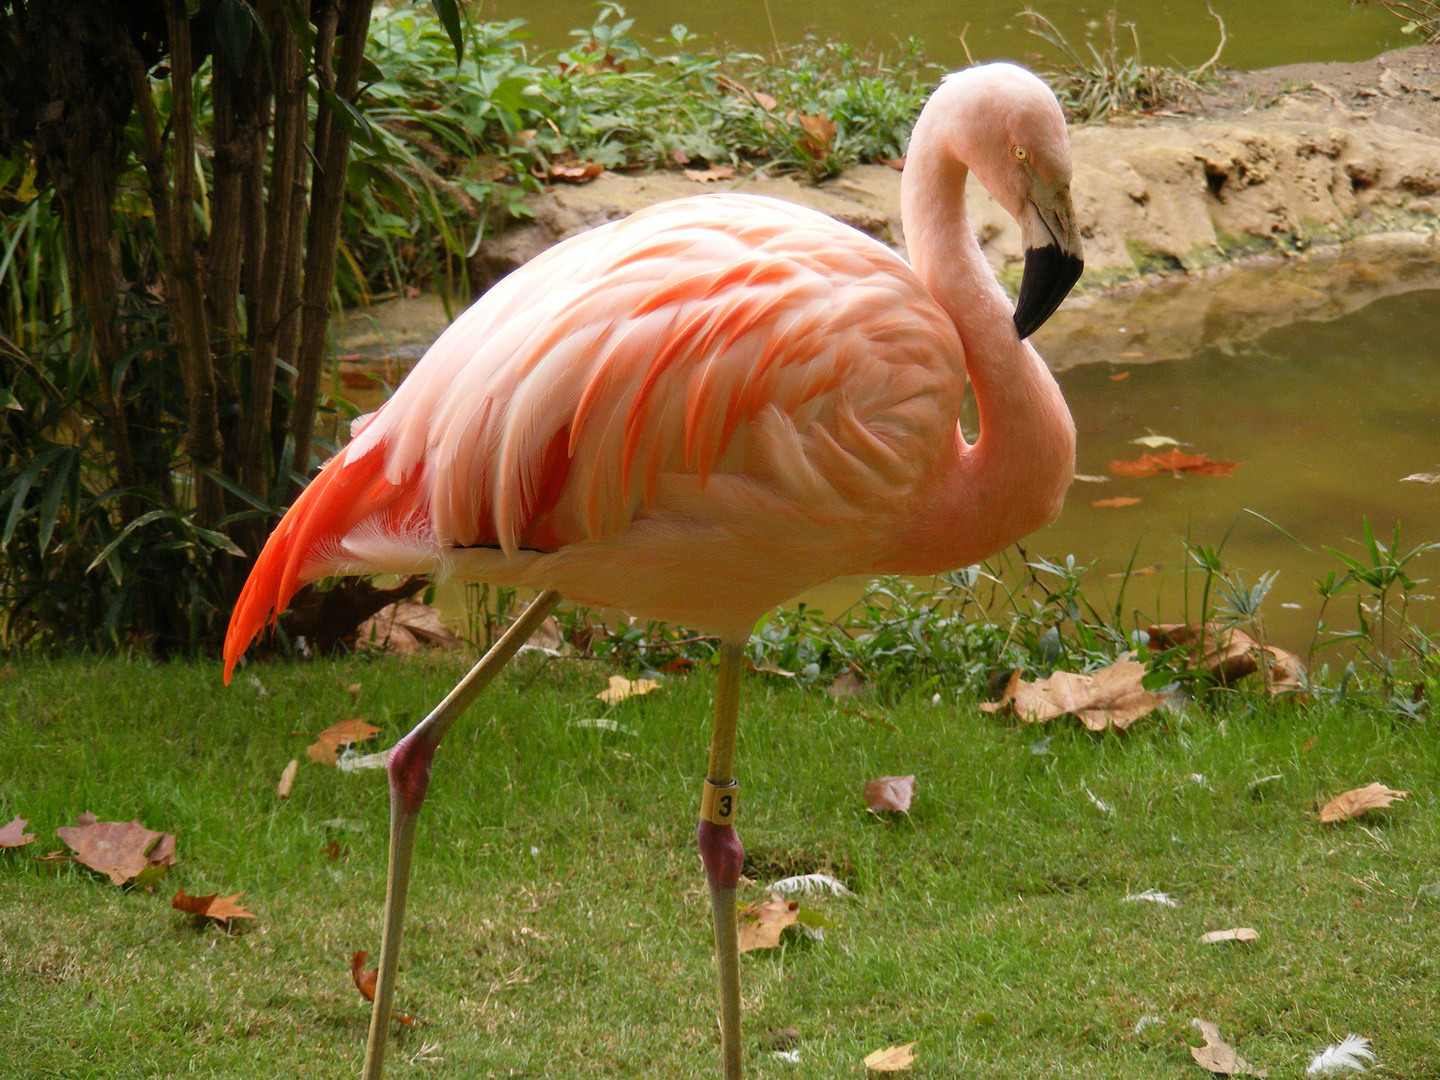 Flamingo #3